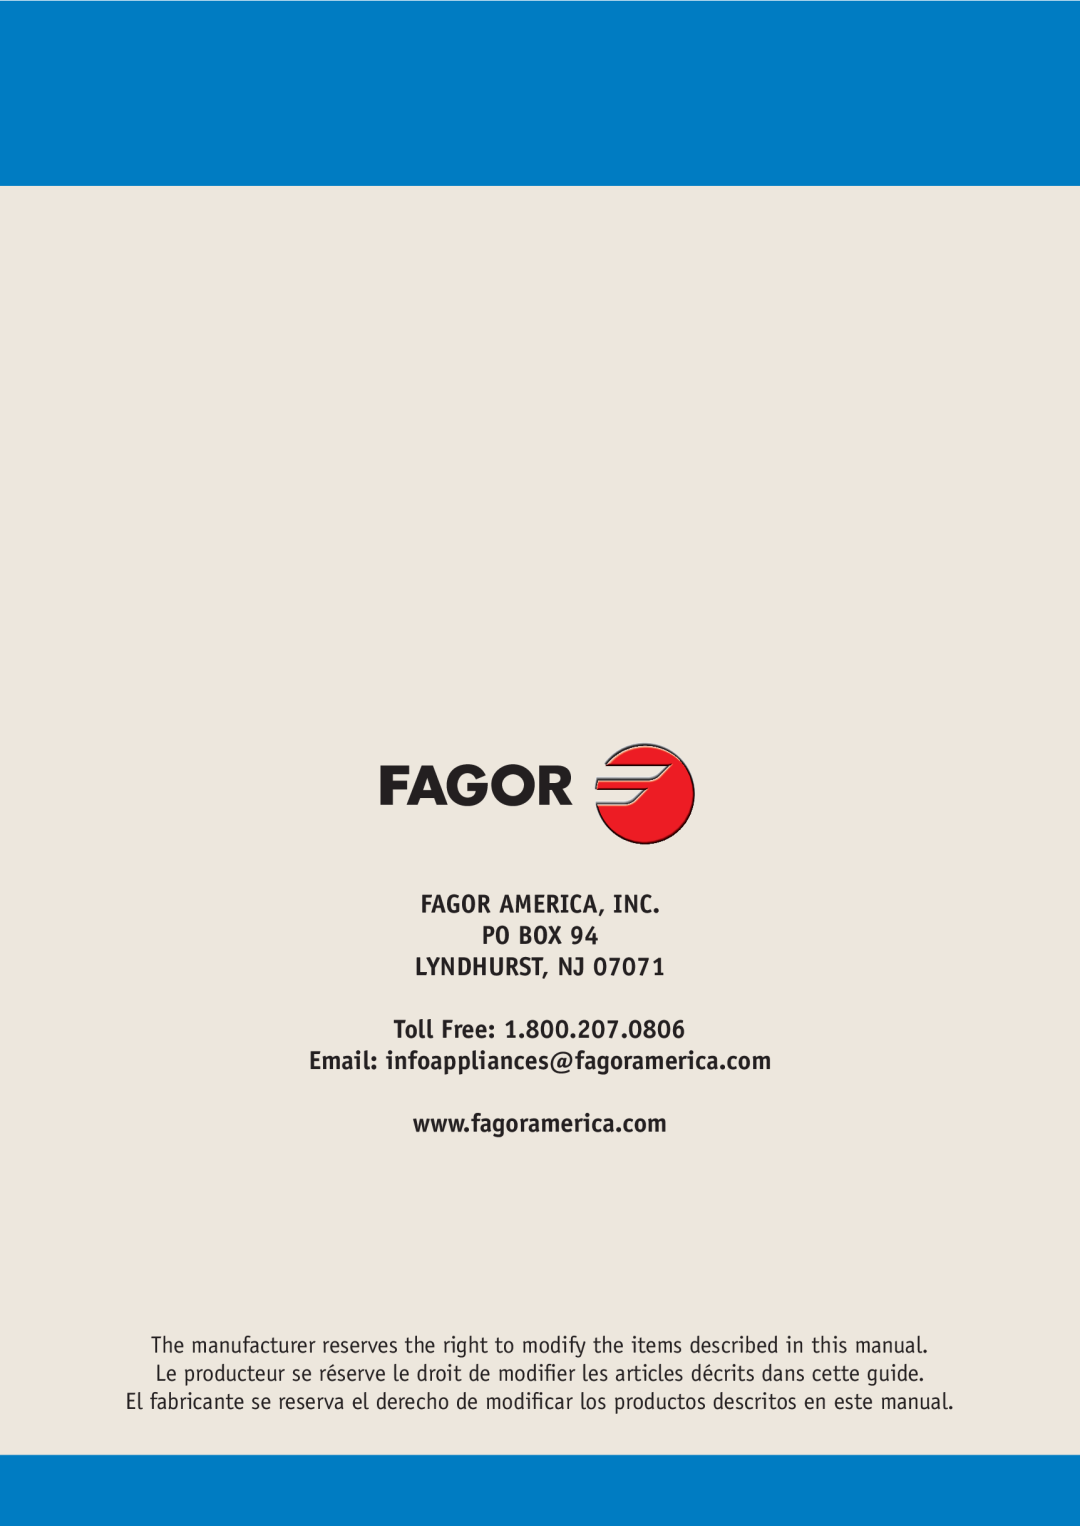 Fagor America LFA-65 IT manual Fagor America, Inc Po Box Lyndhurst, Nj, Toll Free: Email: infoappliances@fagoramerica.com 